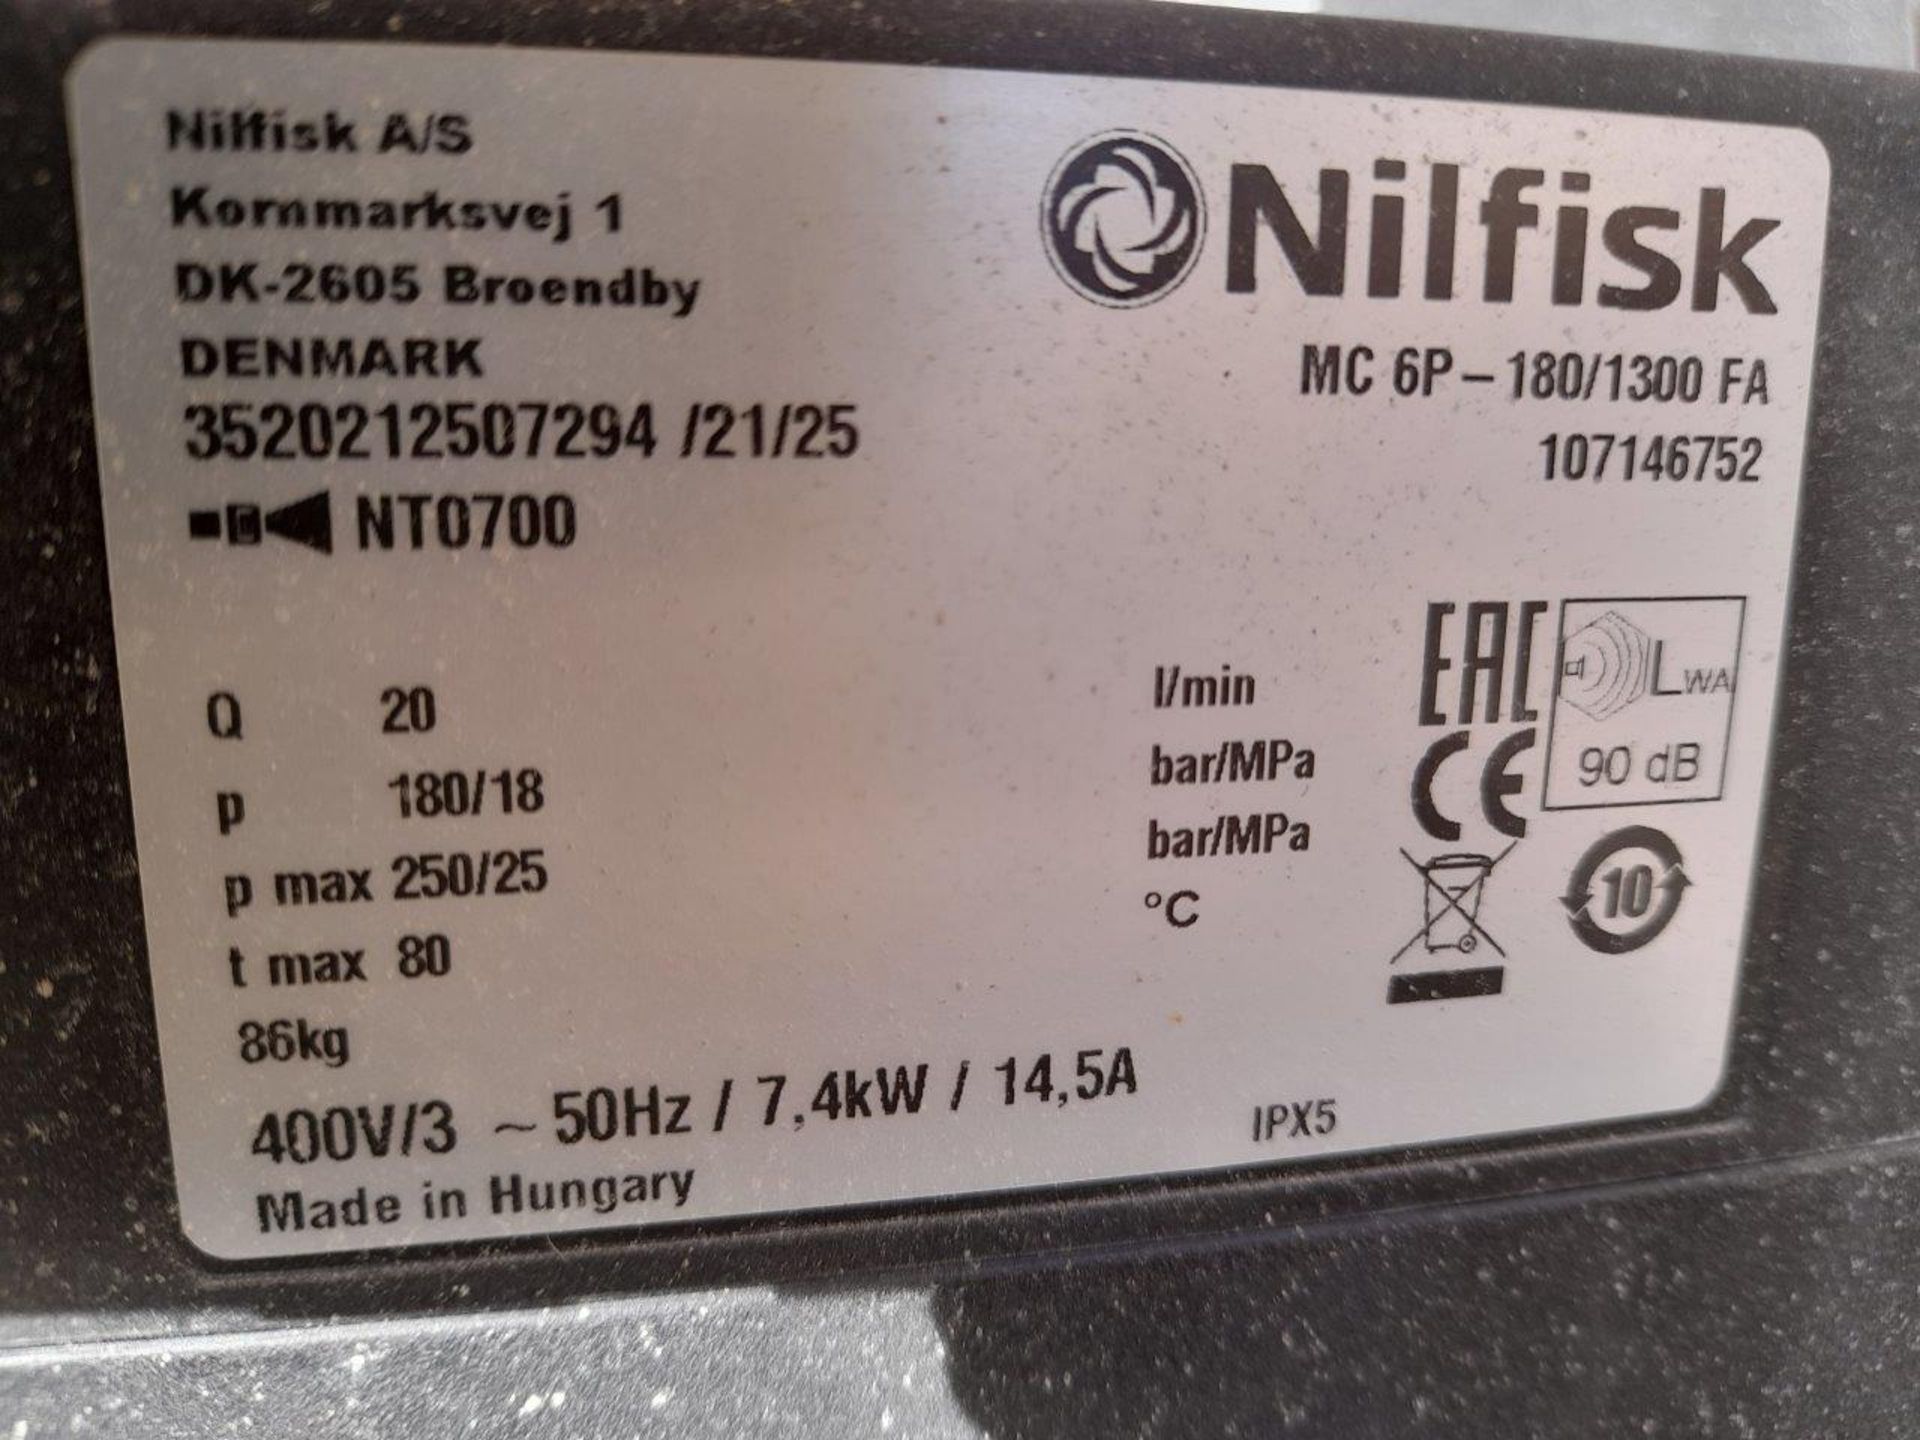 Nilfisk MC 6P pressure washer - Image 3 of 3